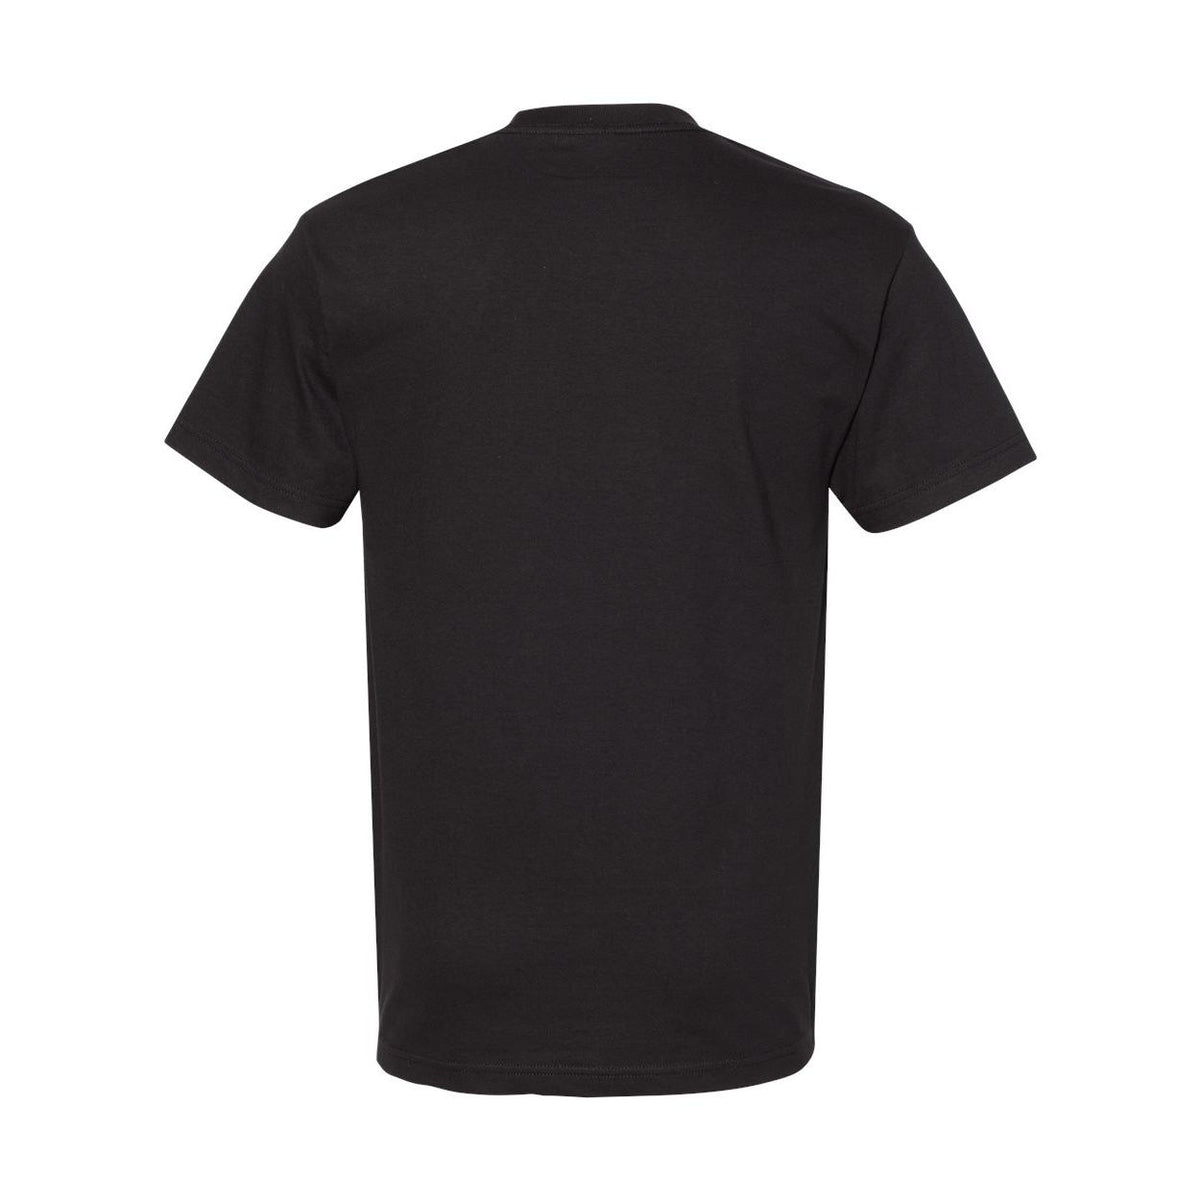 Capitol Black Adult T-Shirt, Color: Black